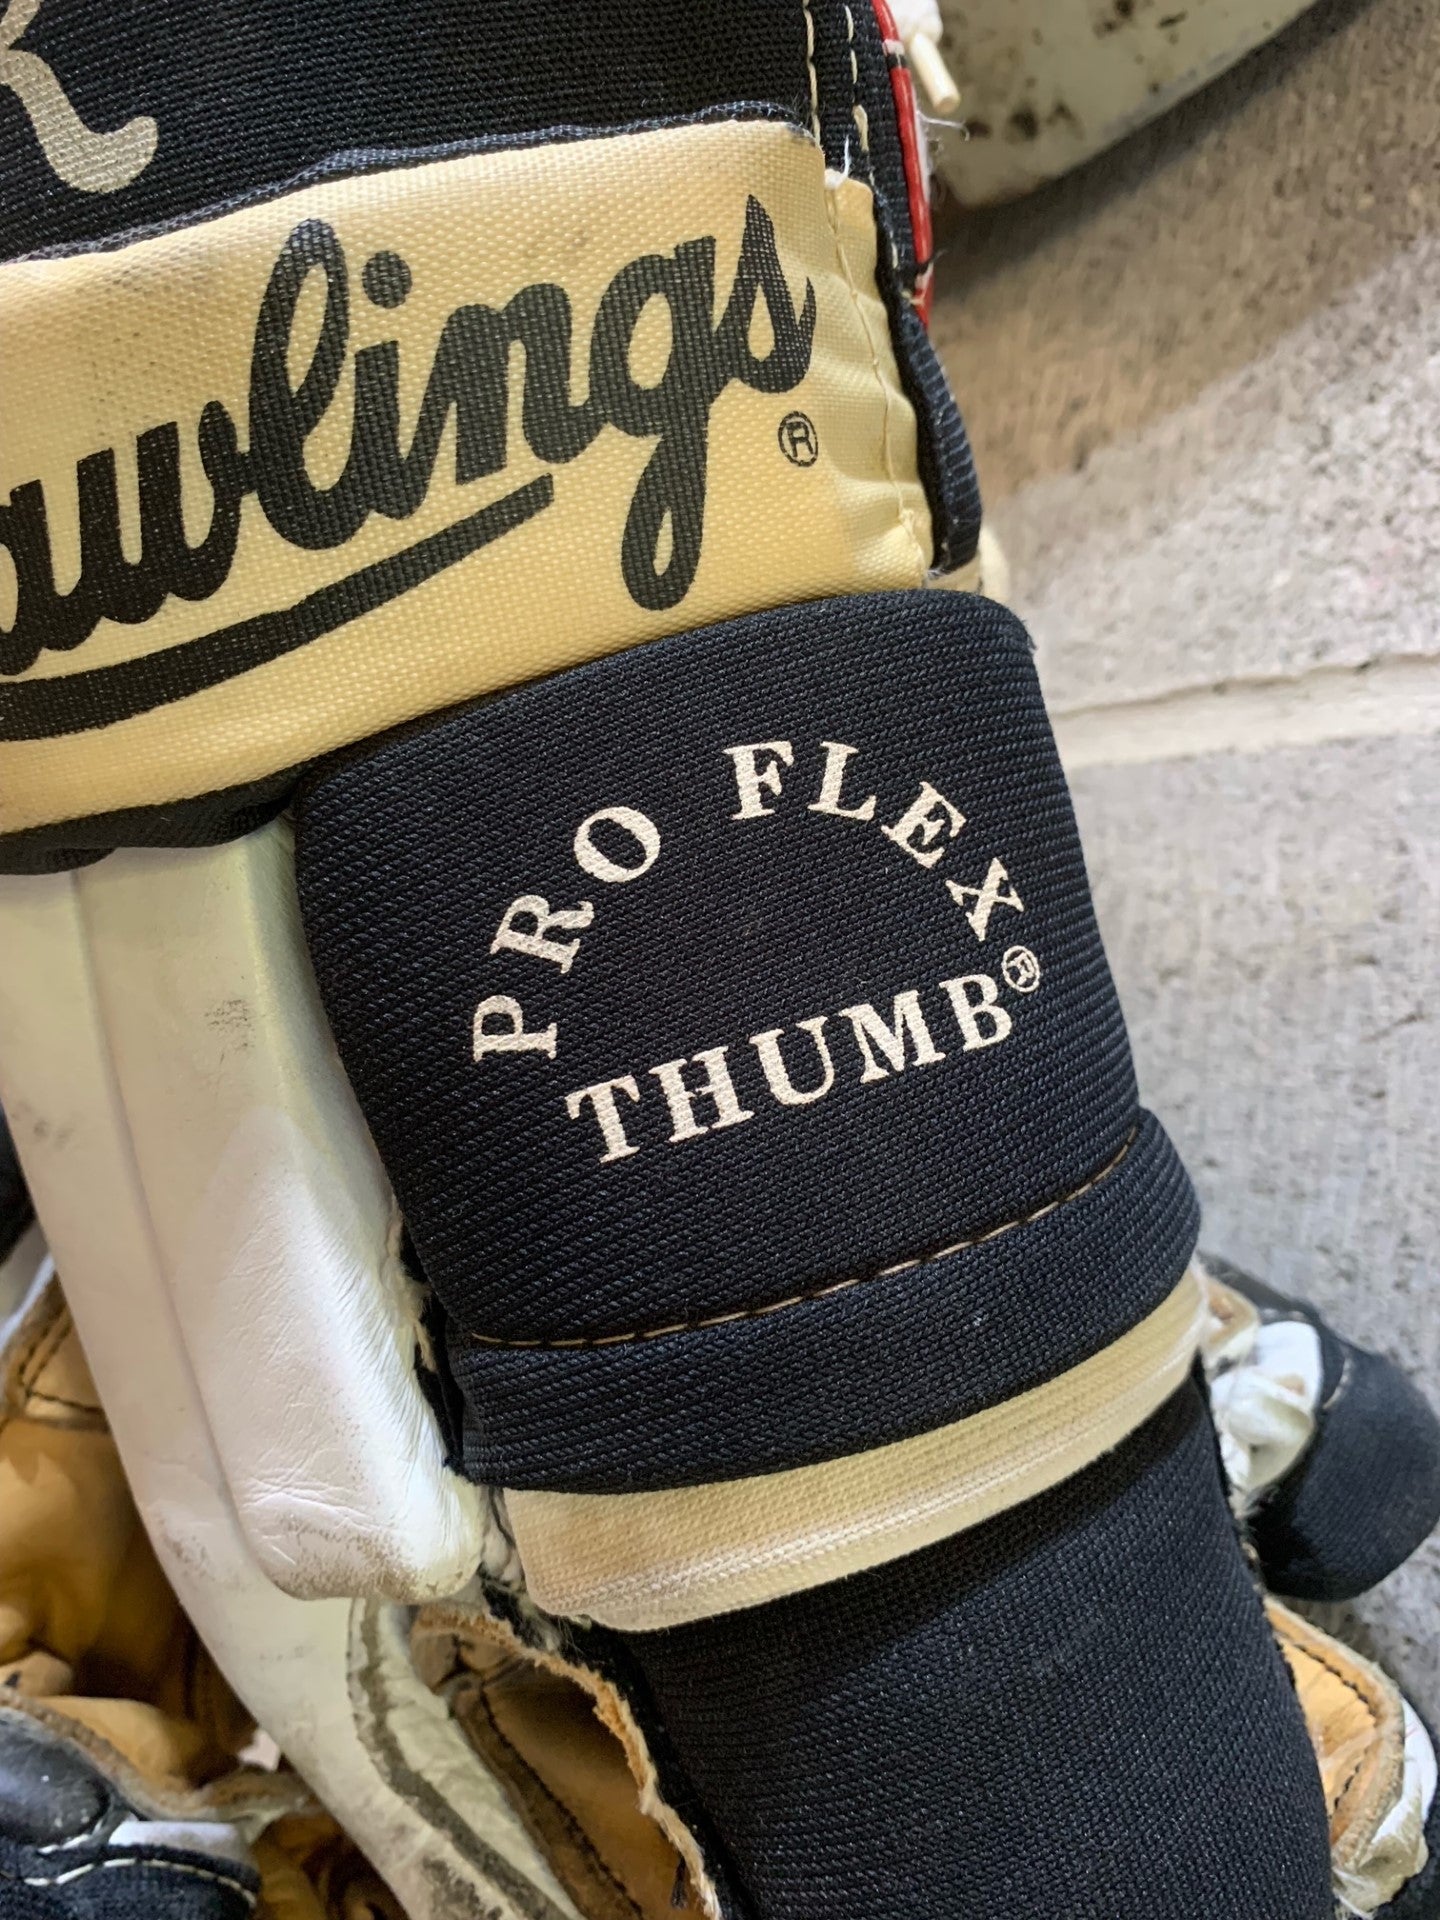 Player hockey gloves: Rawlings